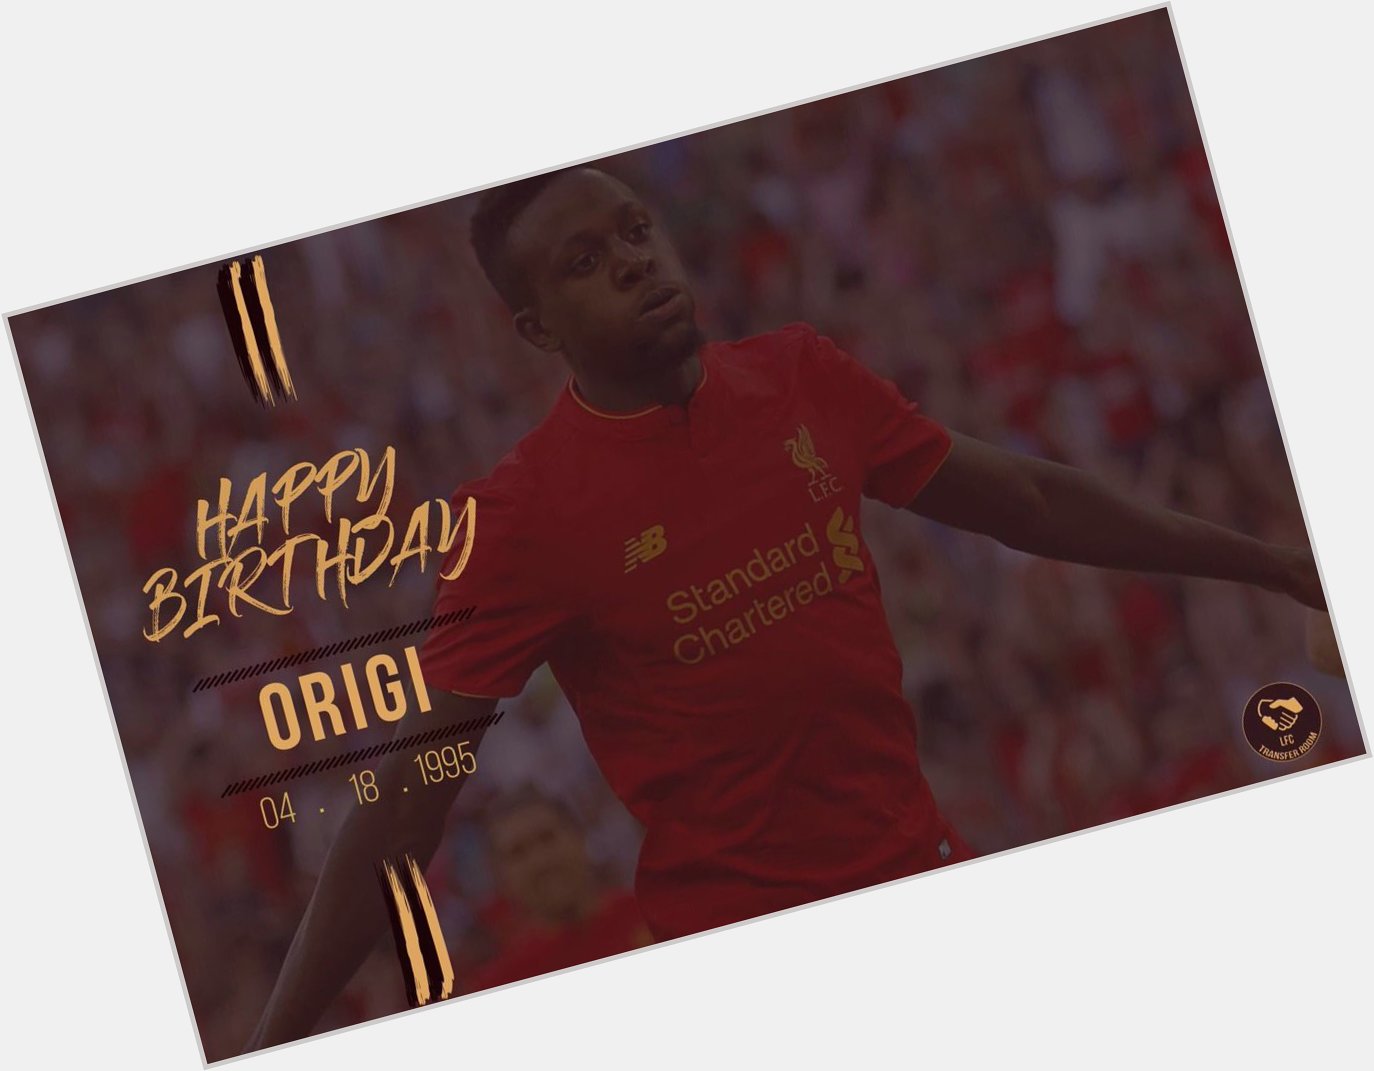  | Happy birthday to the Liverpool & Belgium international striker Divock Origi who turns 22 today! 